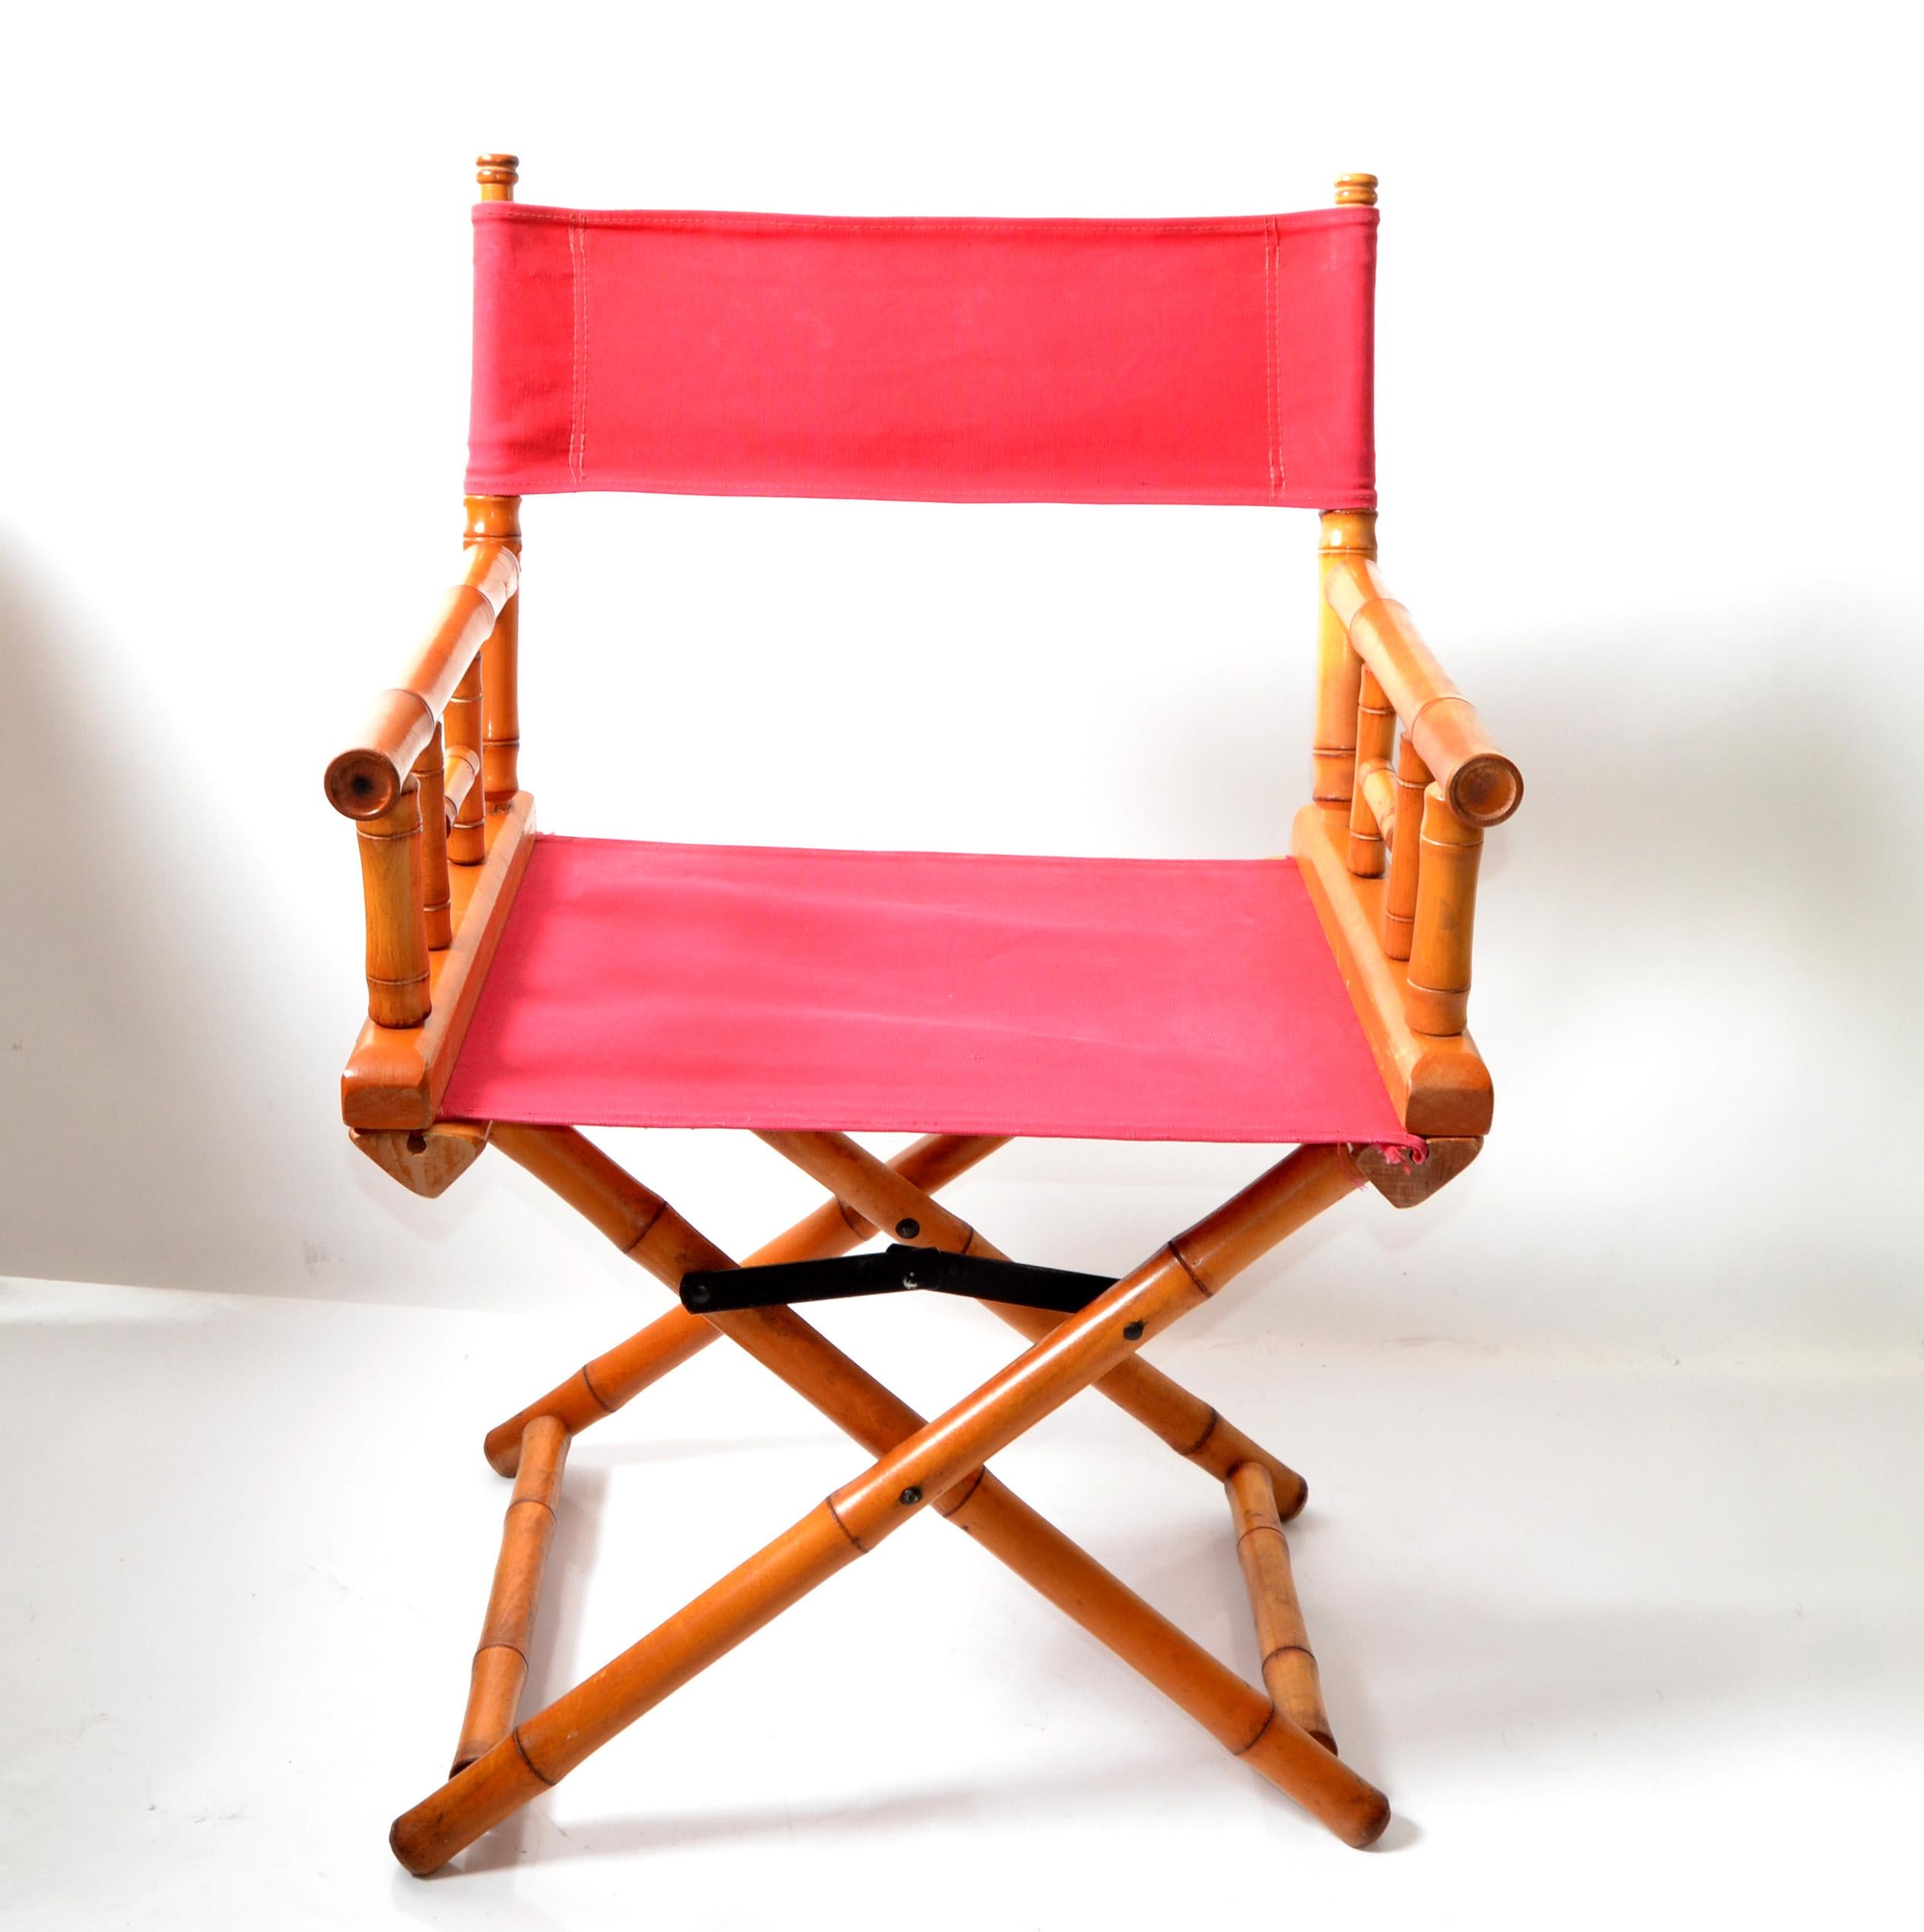 Mid-Century Modern coral red cottan canvas and bamboo wood folding director chair with canvas sling seat and back rests. 
Der Telescope Furniture Company zugeschrieben, um 1970, hergestellt in den USA, unsigniert.
Der Stuhl ist in sehr gutem,